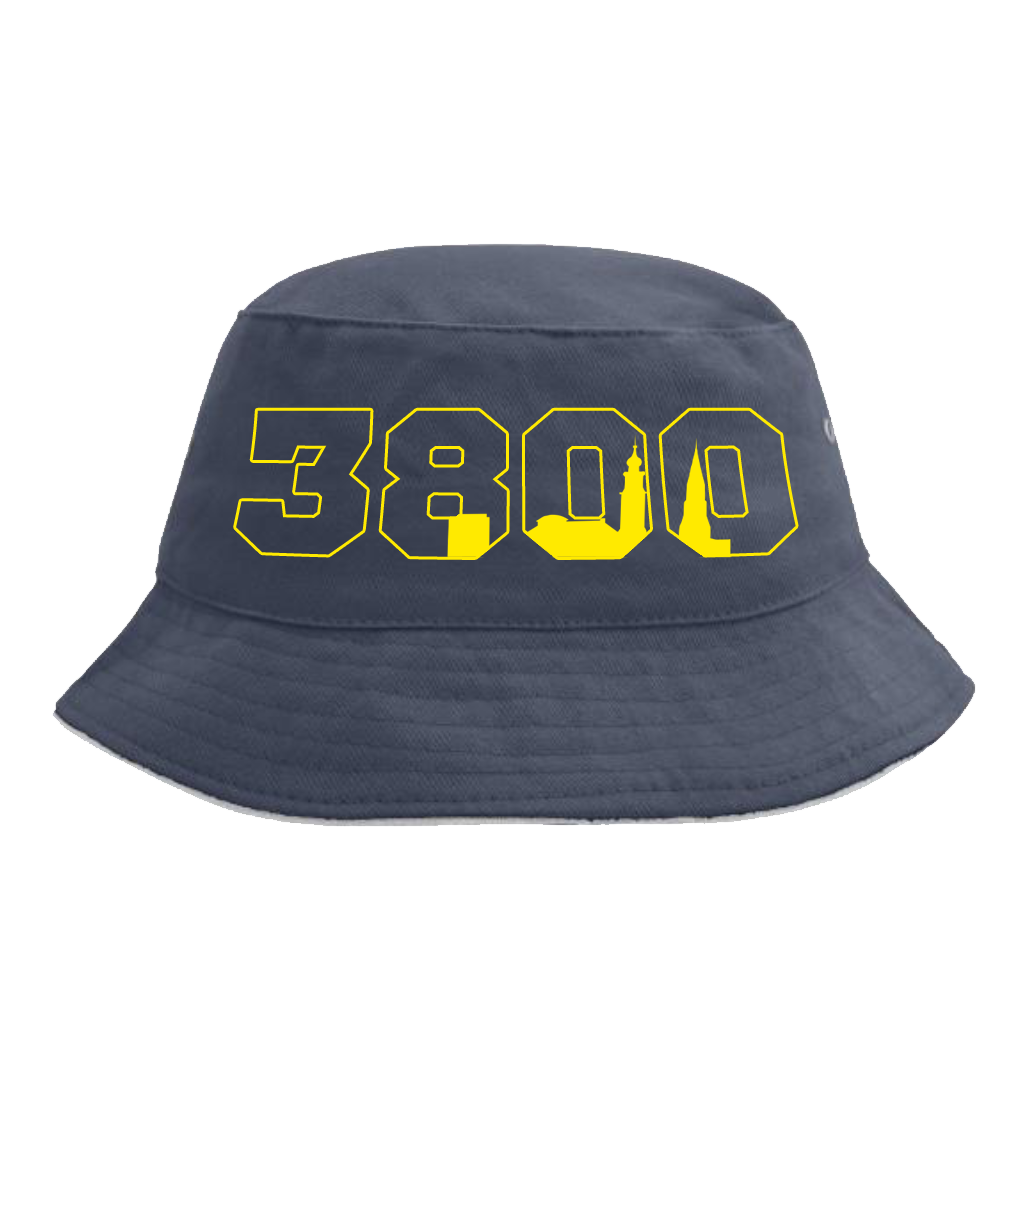 Bucket hat - 3800